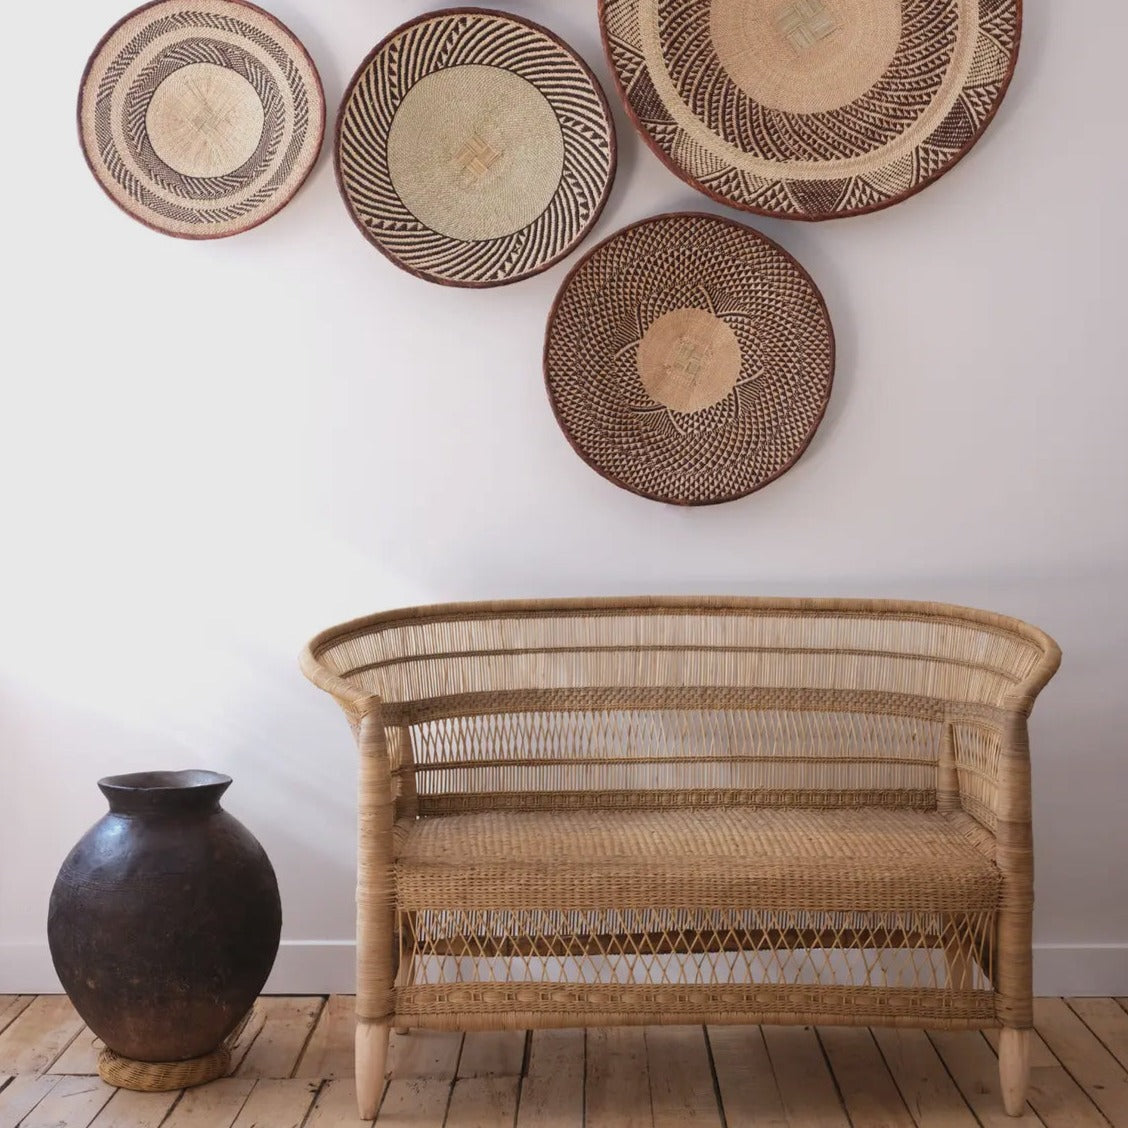 Malawi cane sofa, håndvævet. Bæredygtig og Fair Trade fra Malawie